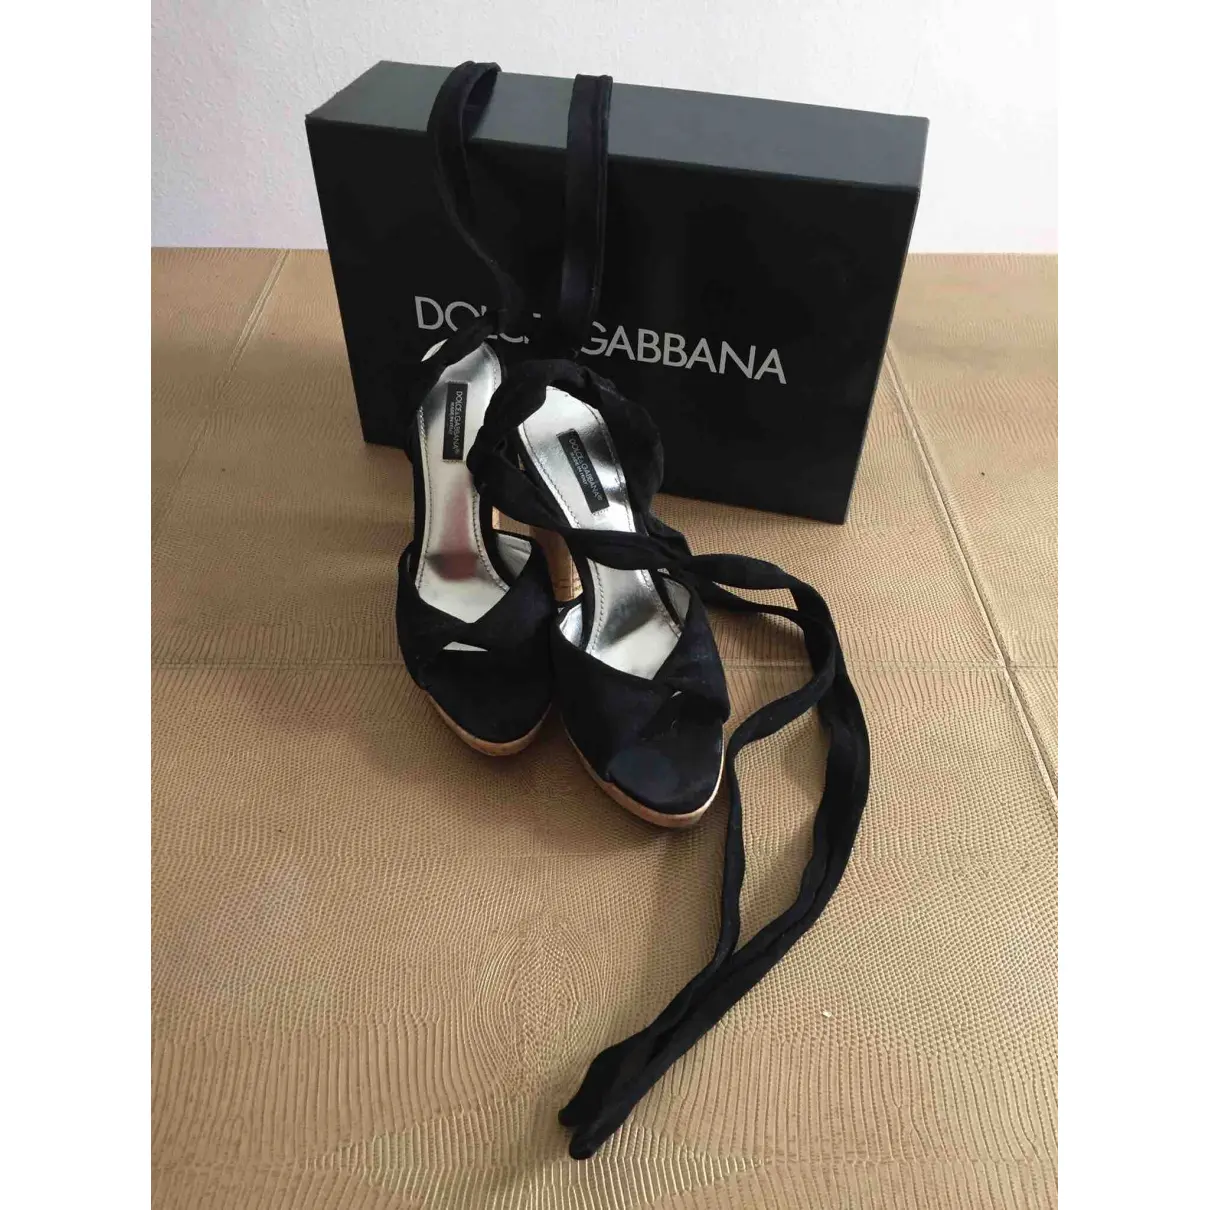 Buy Dolce & Gabbana Sandal online